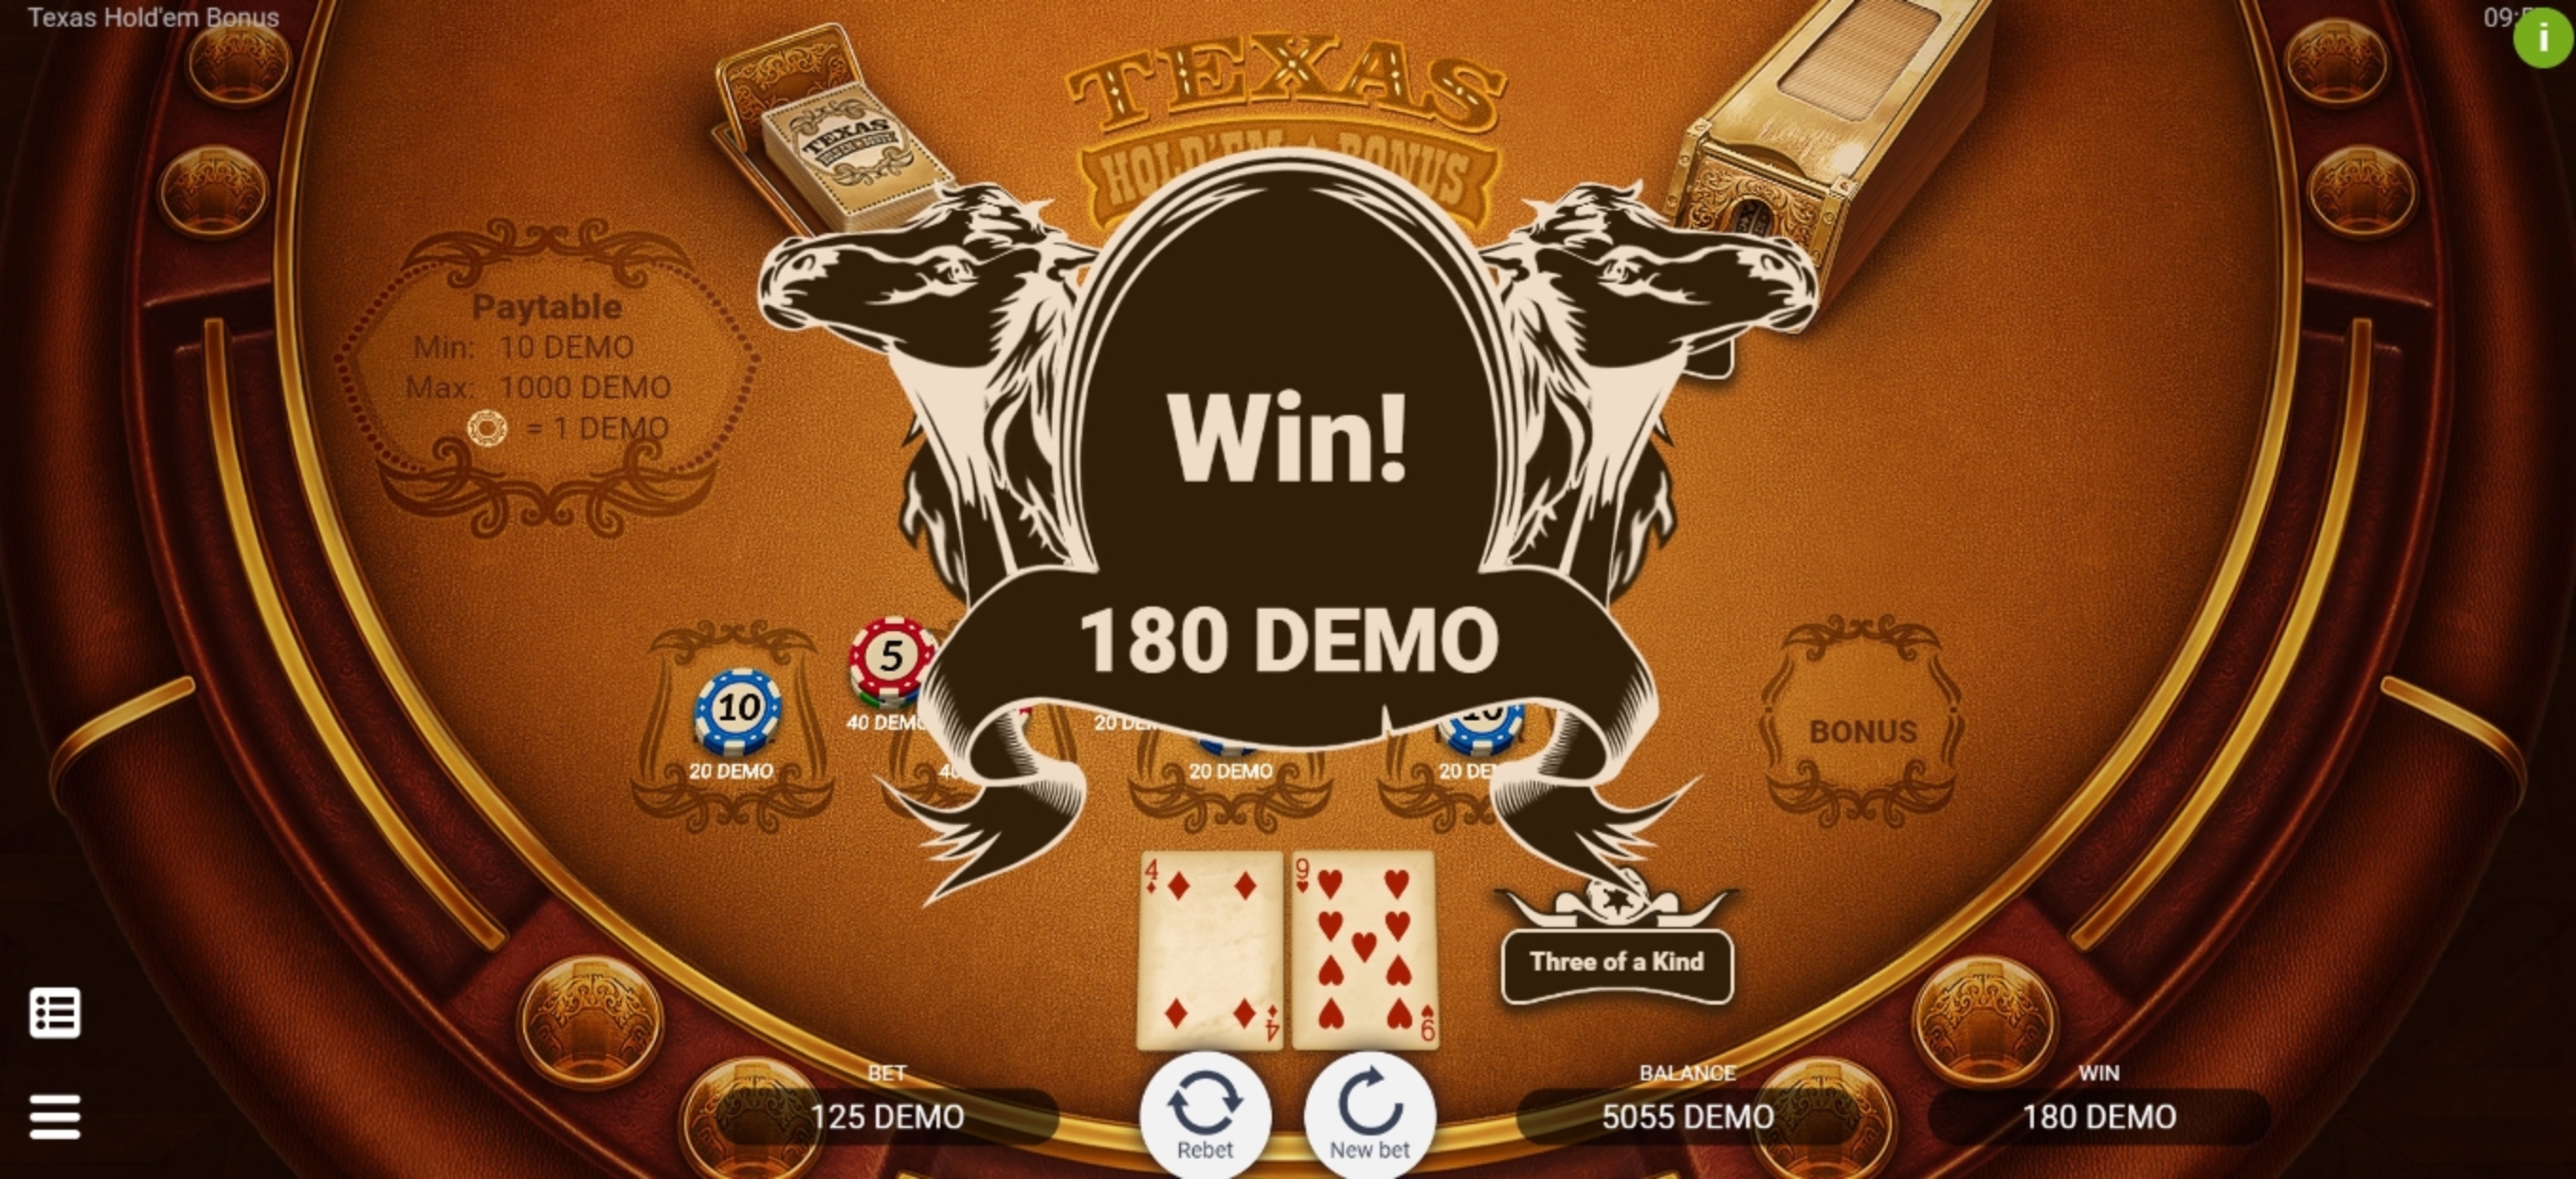 Win Money in Texas Holdem Bonus Free Slot Game by Evoplay Entertainment